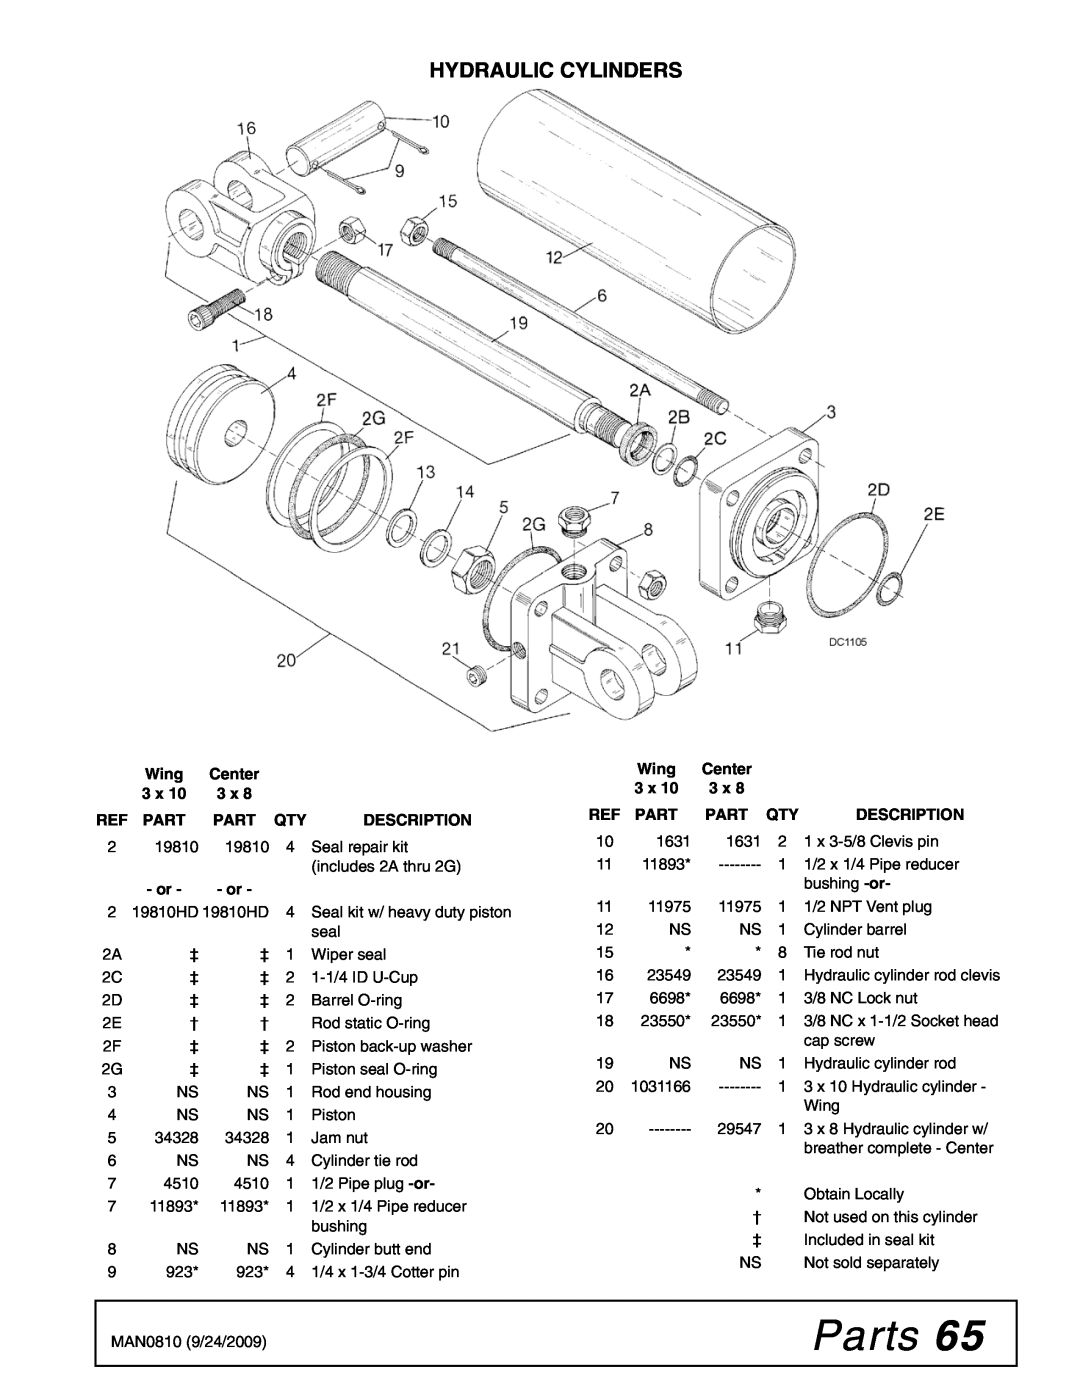 Woods Equipment BW15LH manual Parts, Wing, Center, Description 